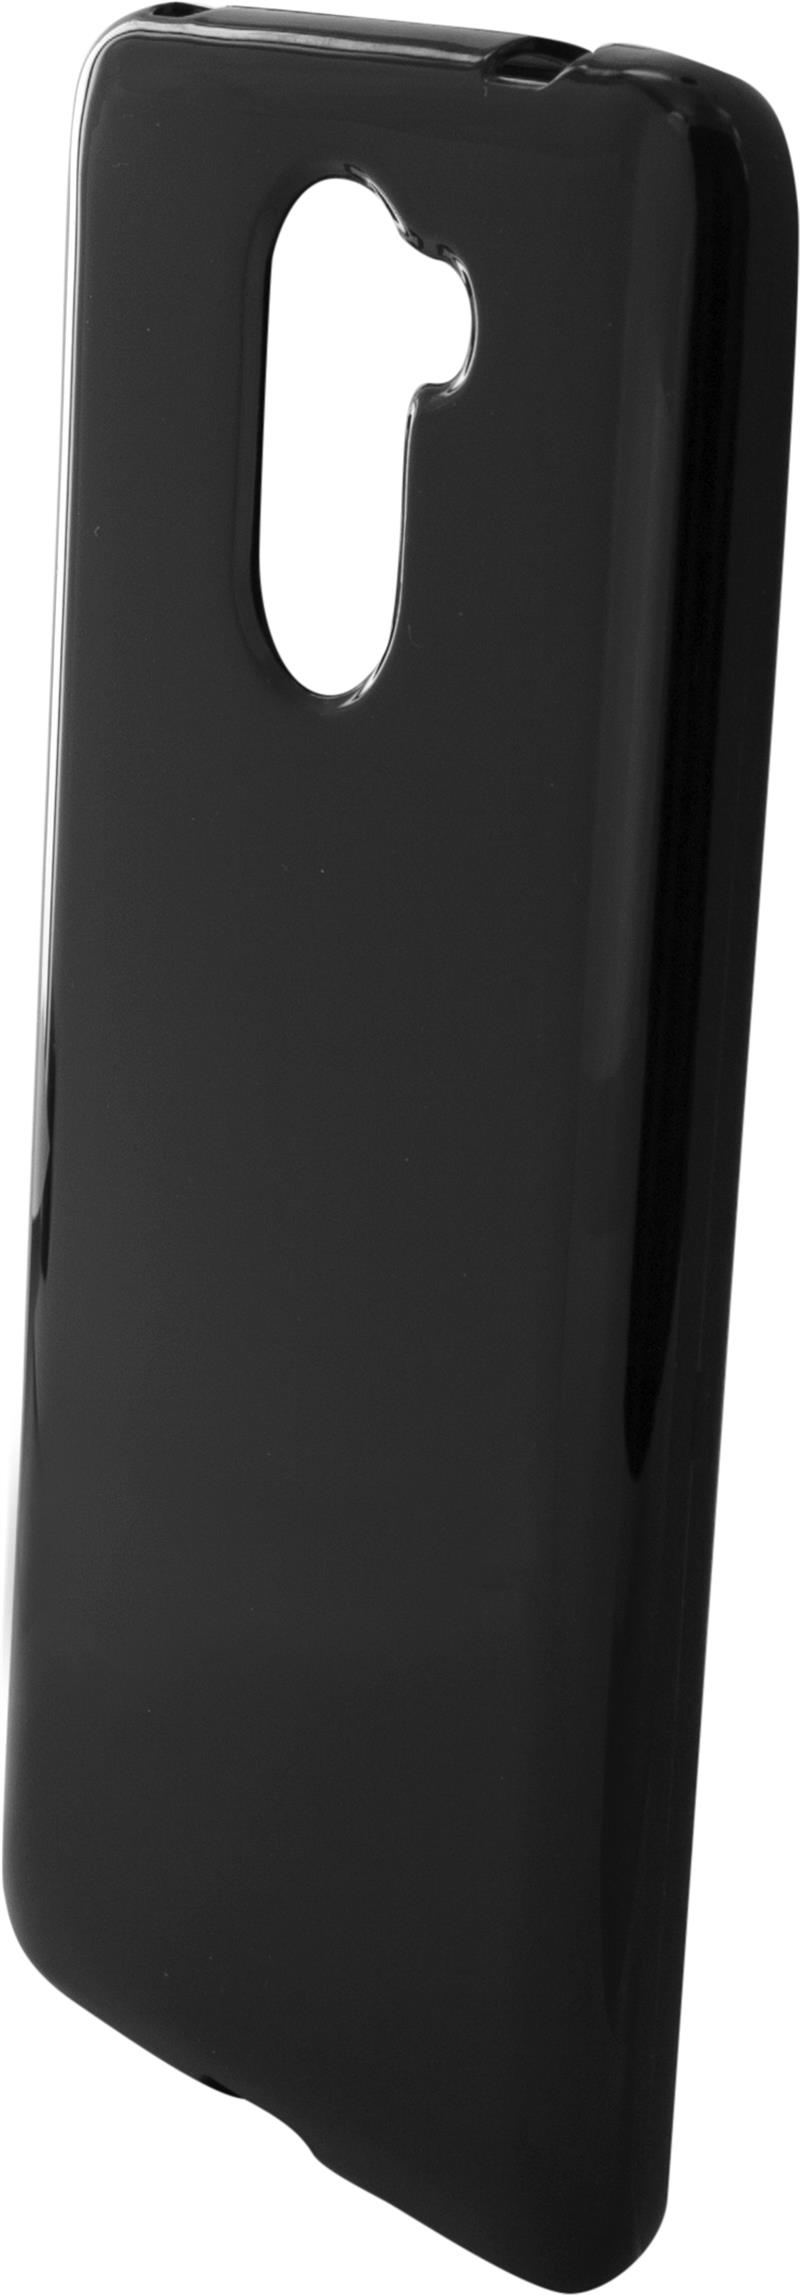 Mobiparts Classic TPU Case Huawei Y7 Black